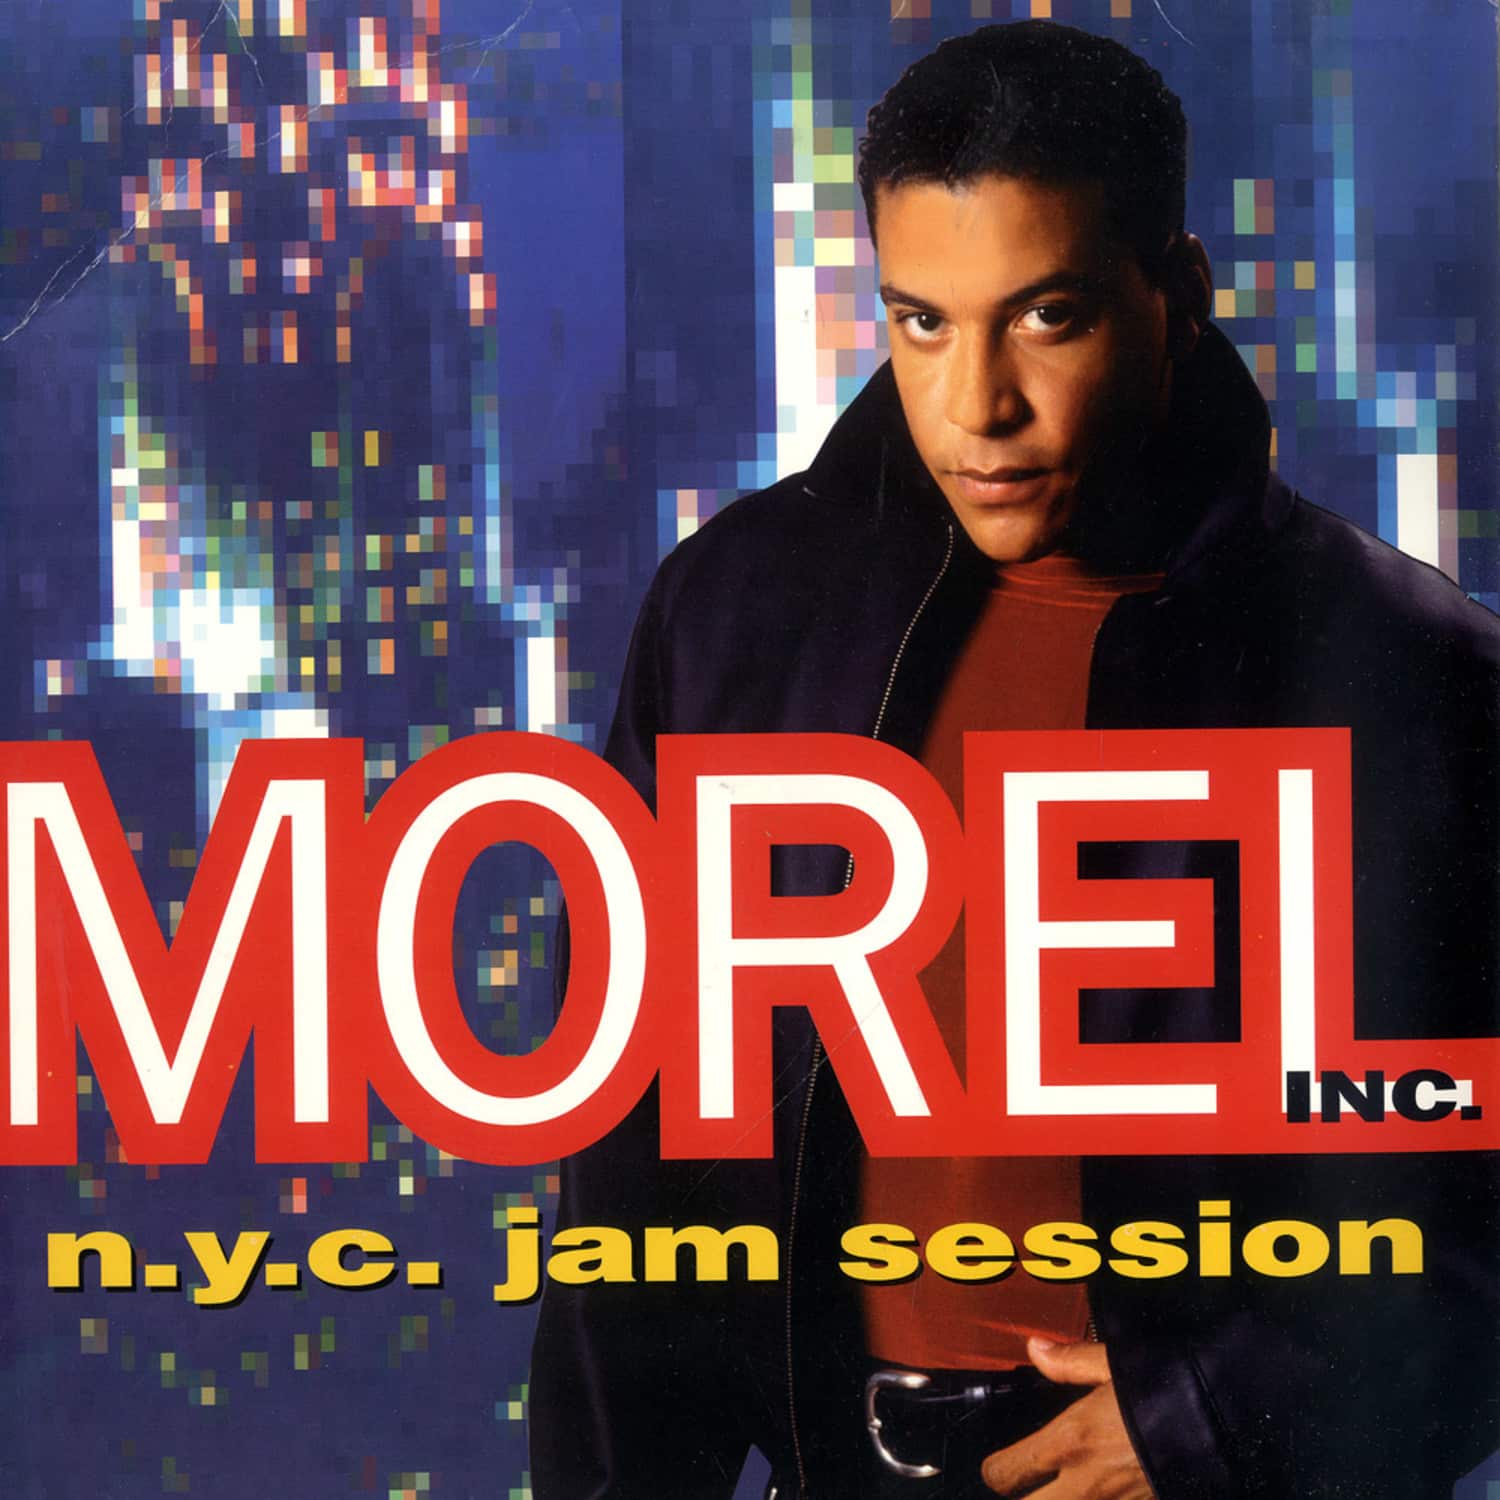 Morel Inc - NYC JAM SESSION 